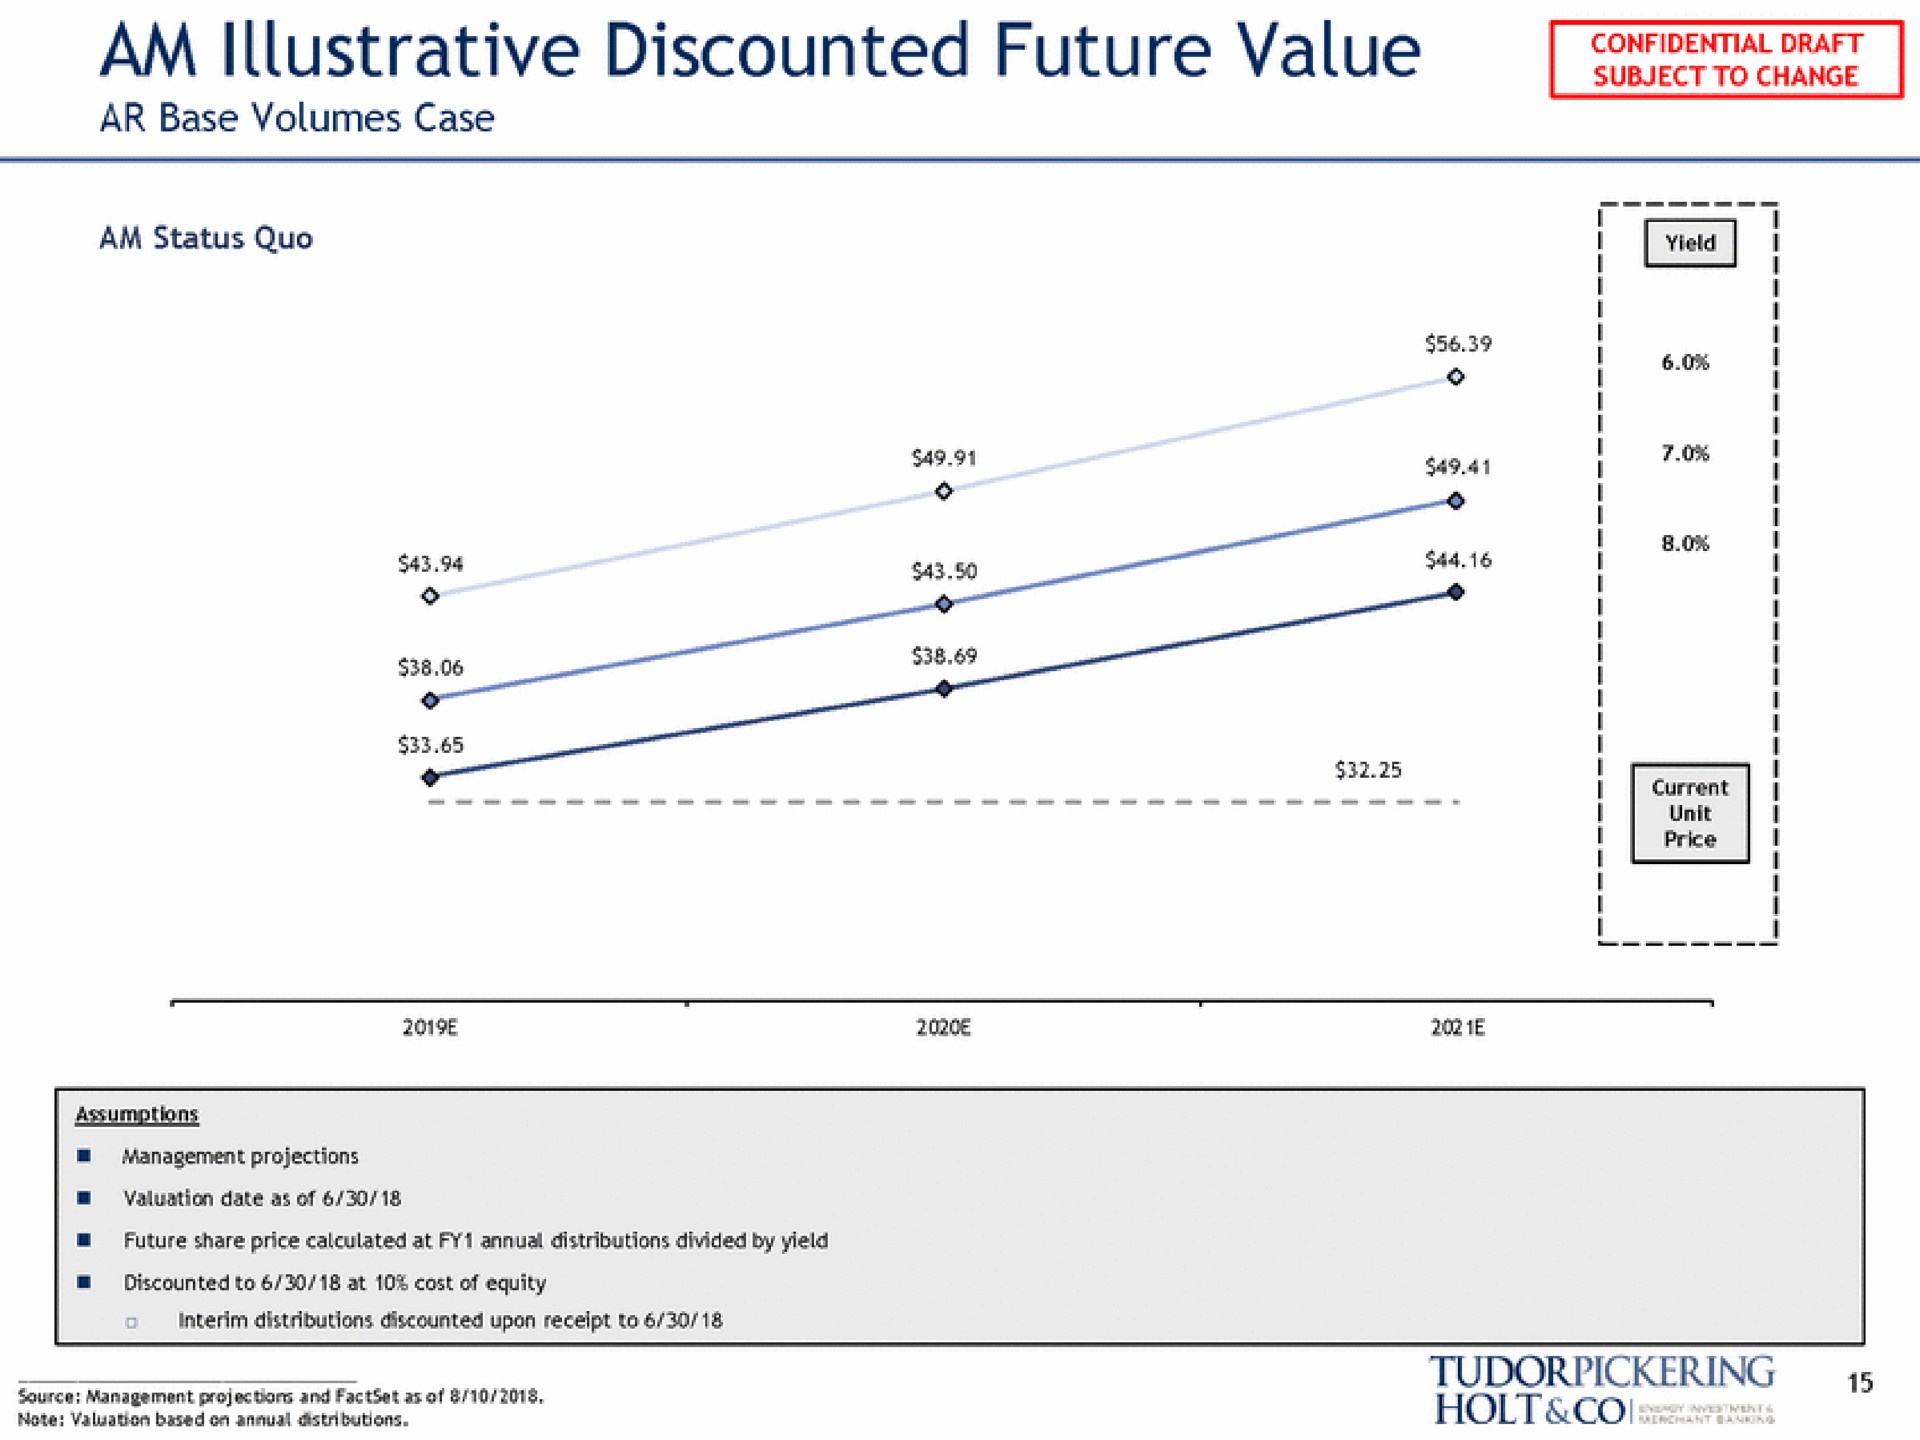 am illustrative discounted future value holt | Tudor, Pickering, Holt & Co